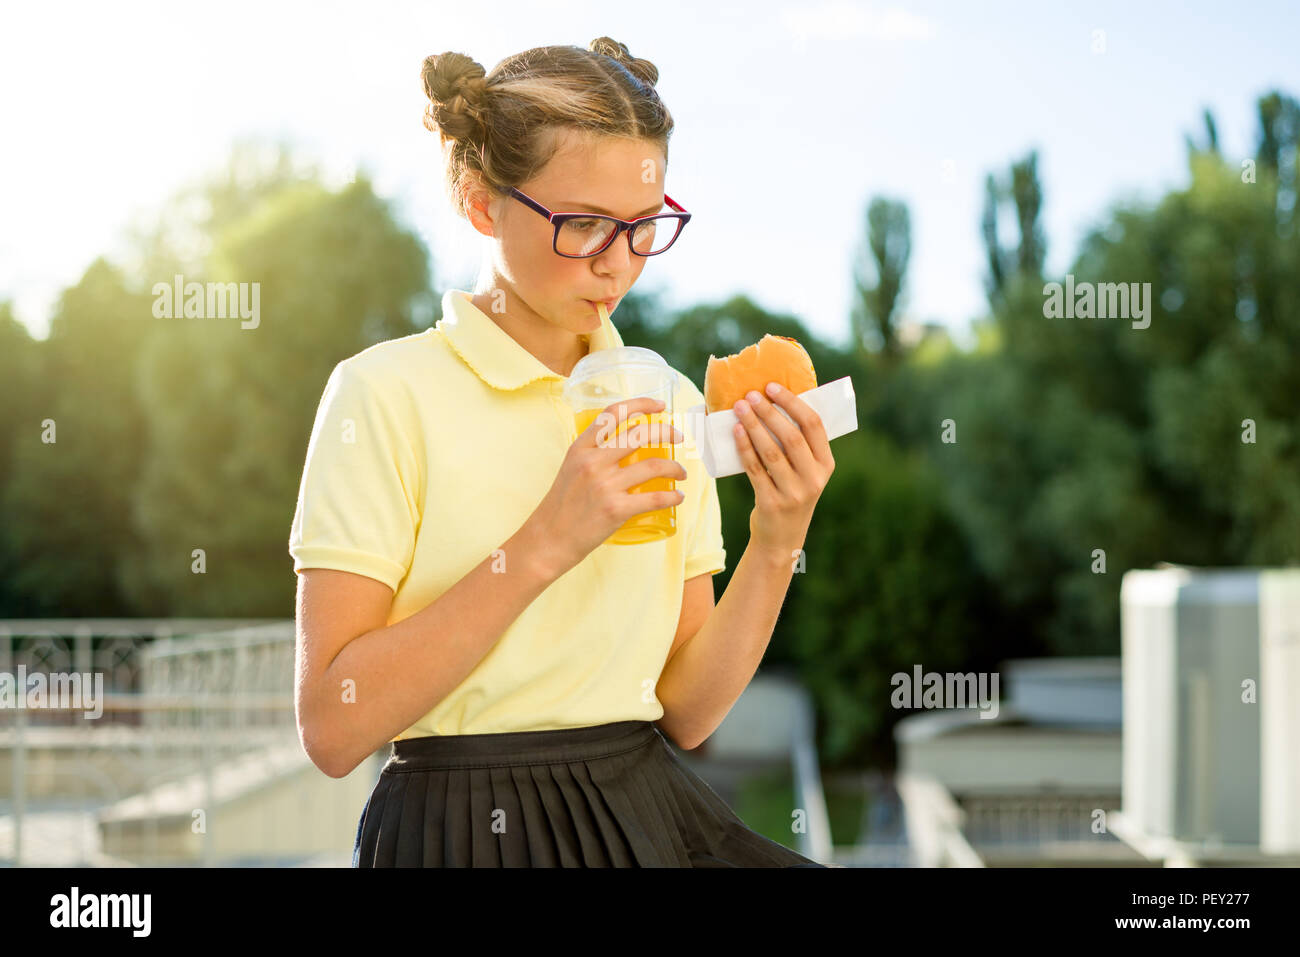 Cute smiling schoolgirl teenager holding a hamburger and orange juice. Back to school outdoor Stock Photo